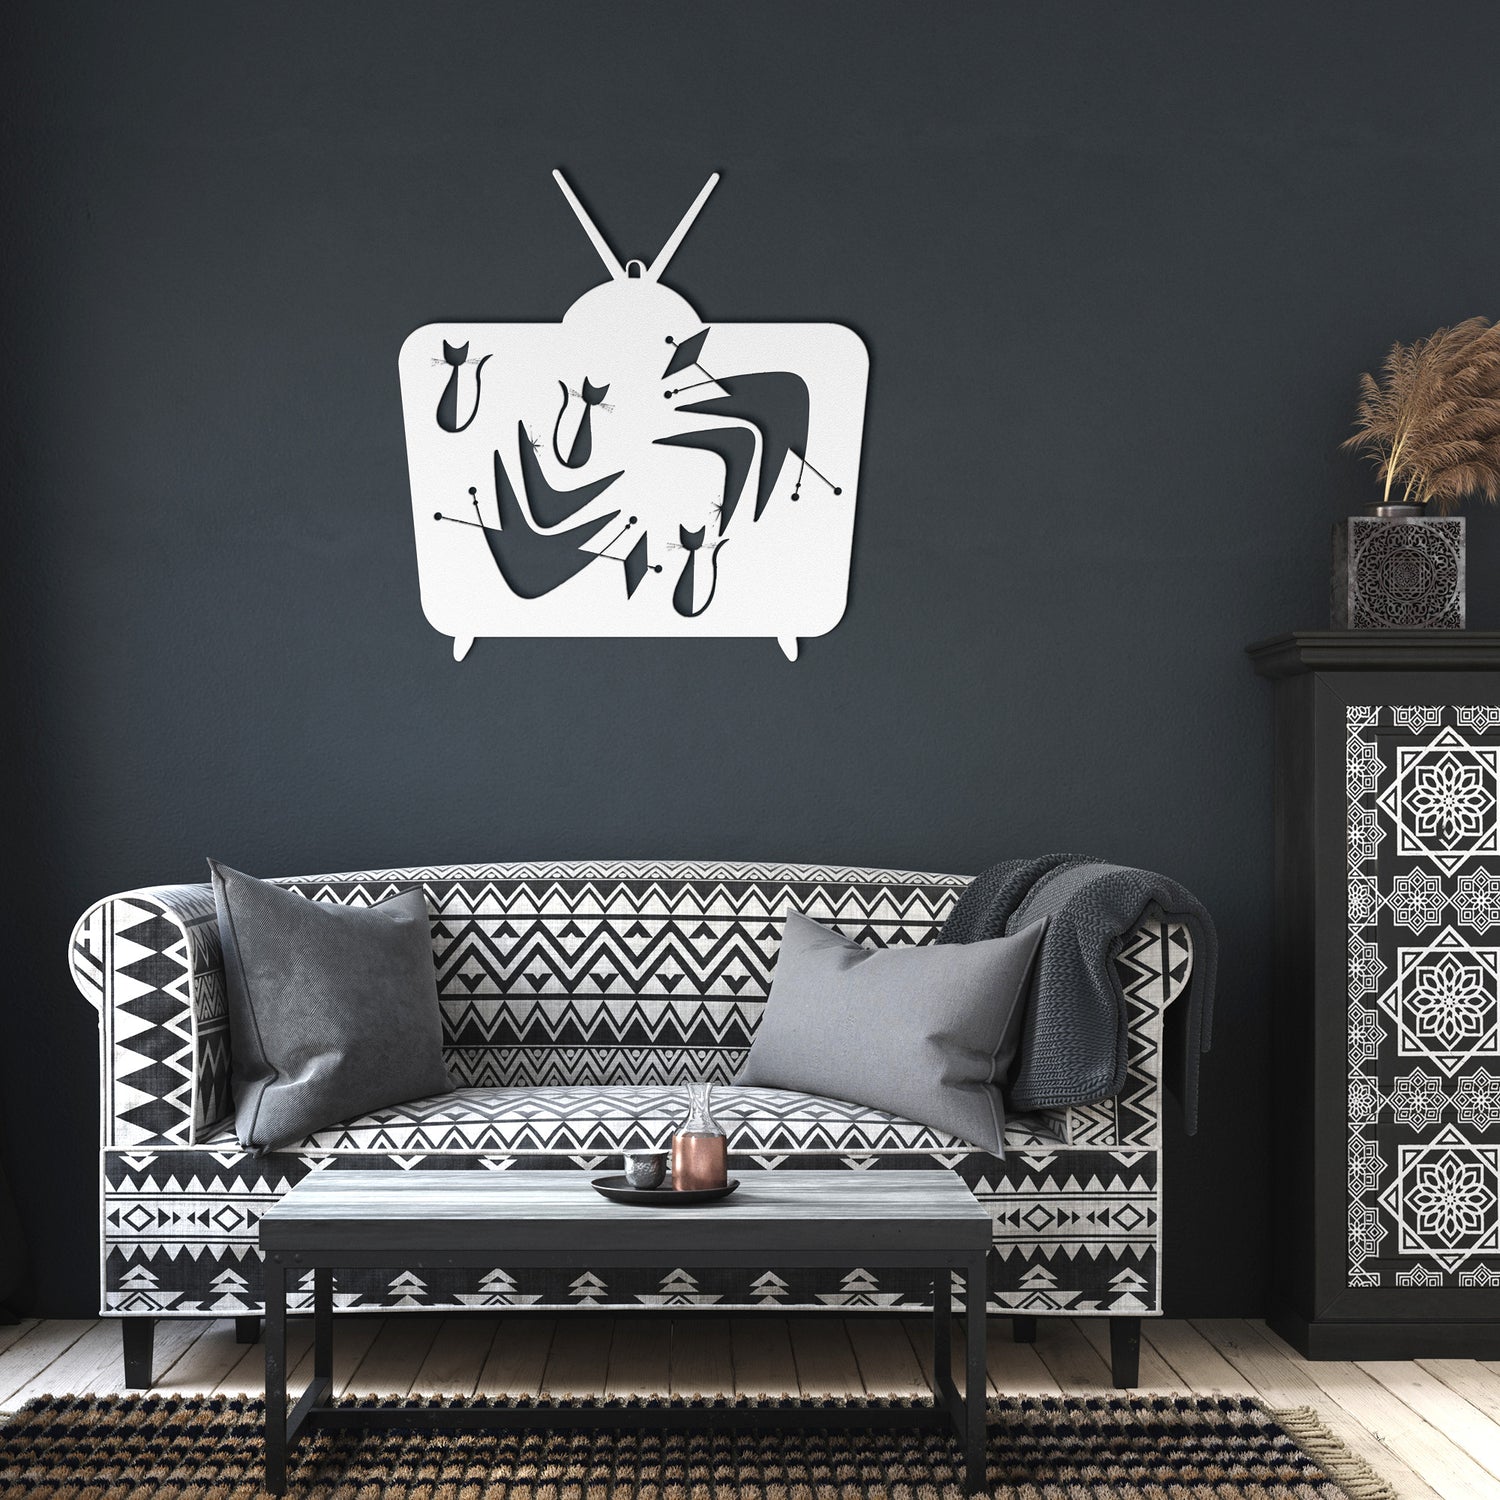 Retro TV Atomic Cat, Mid Century Modern Wall Art, Kitsch Livingroom, Den, Quirky MCM Metal Works